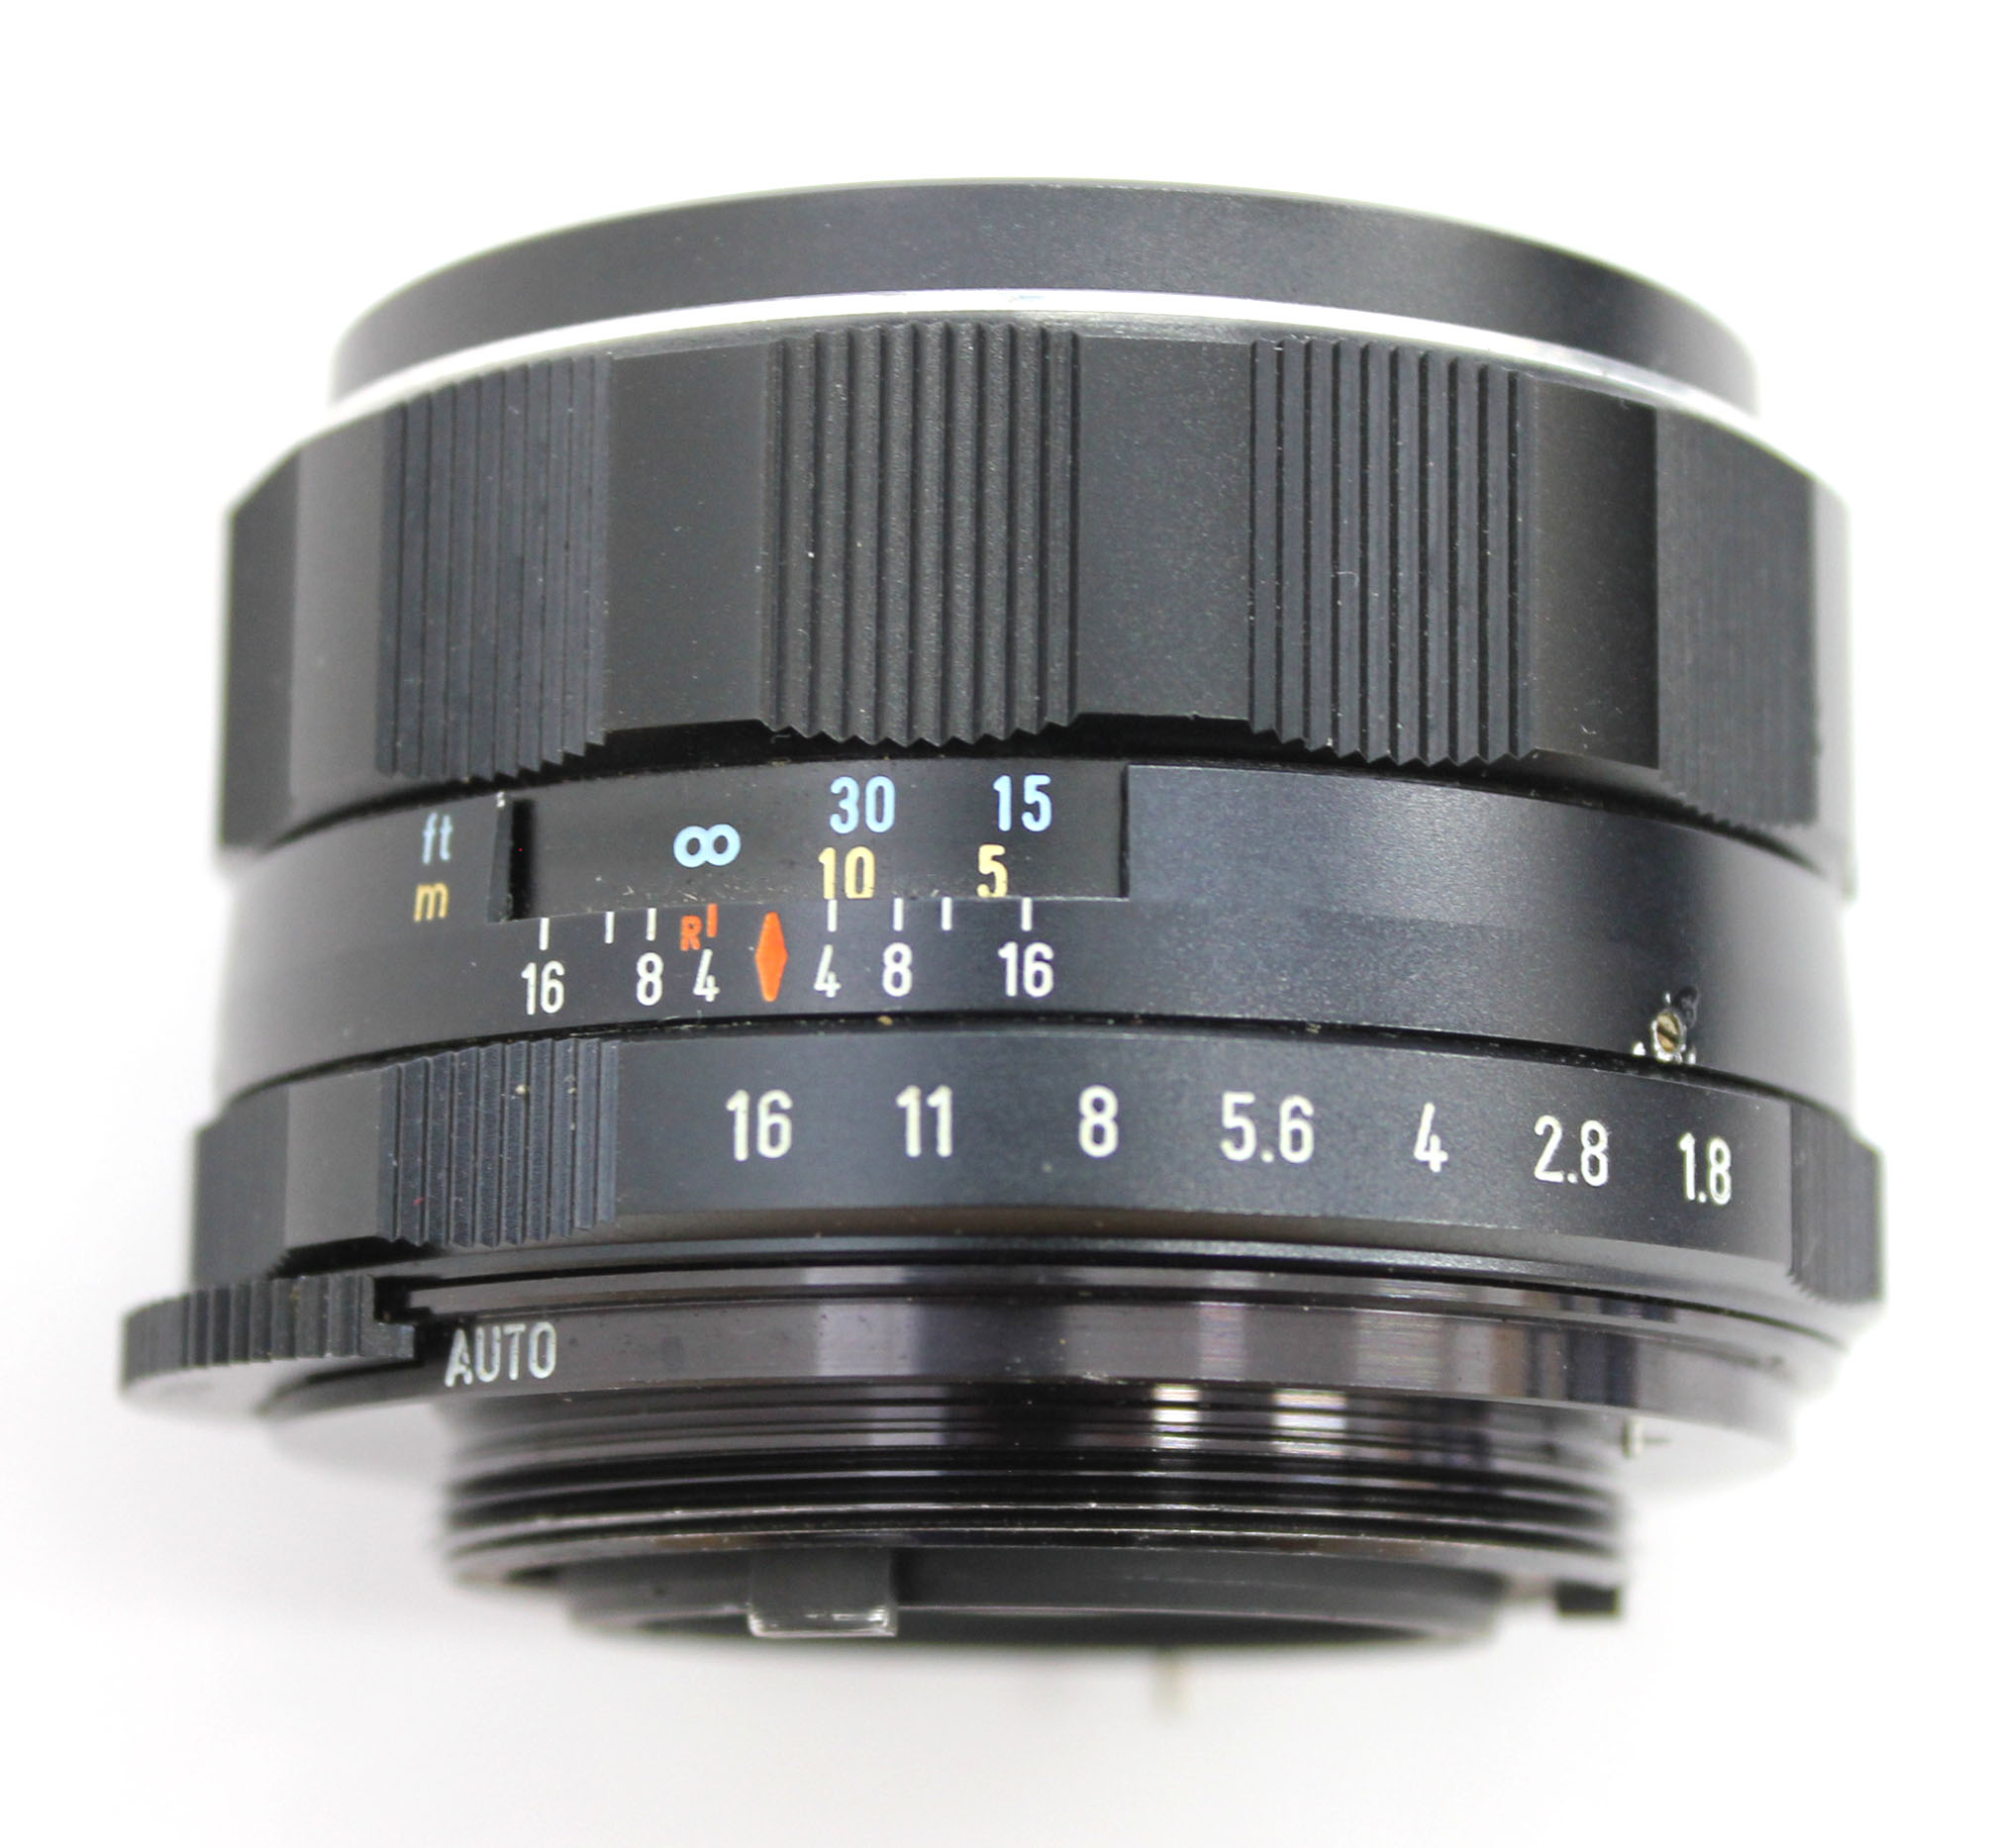 Asahi Pentax Spotmatic F SPF 35mm SLR Camera Black w/ SMC Super-Multi-Coated Takumar 55mm F/1.8 Lens from Japan Photo 15